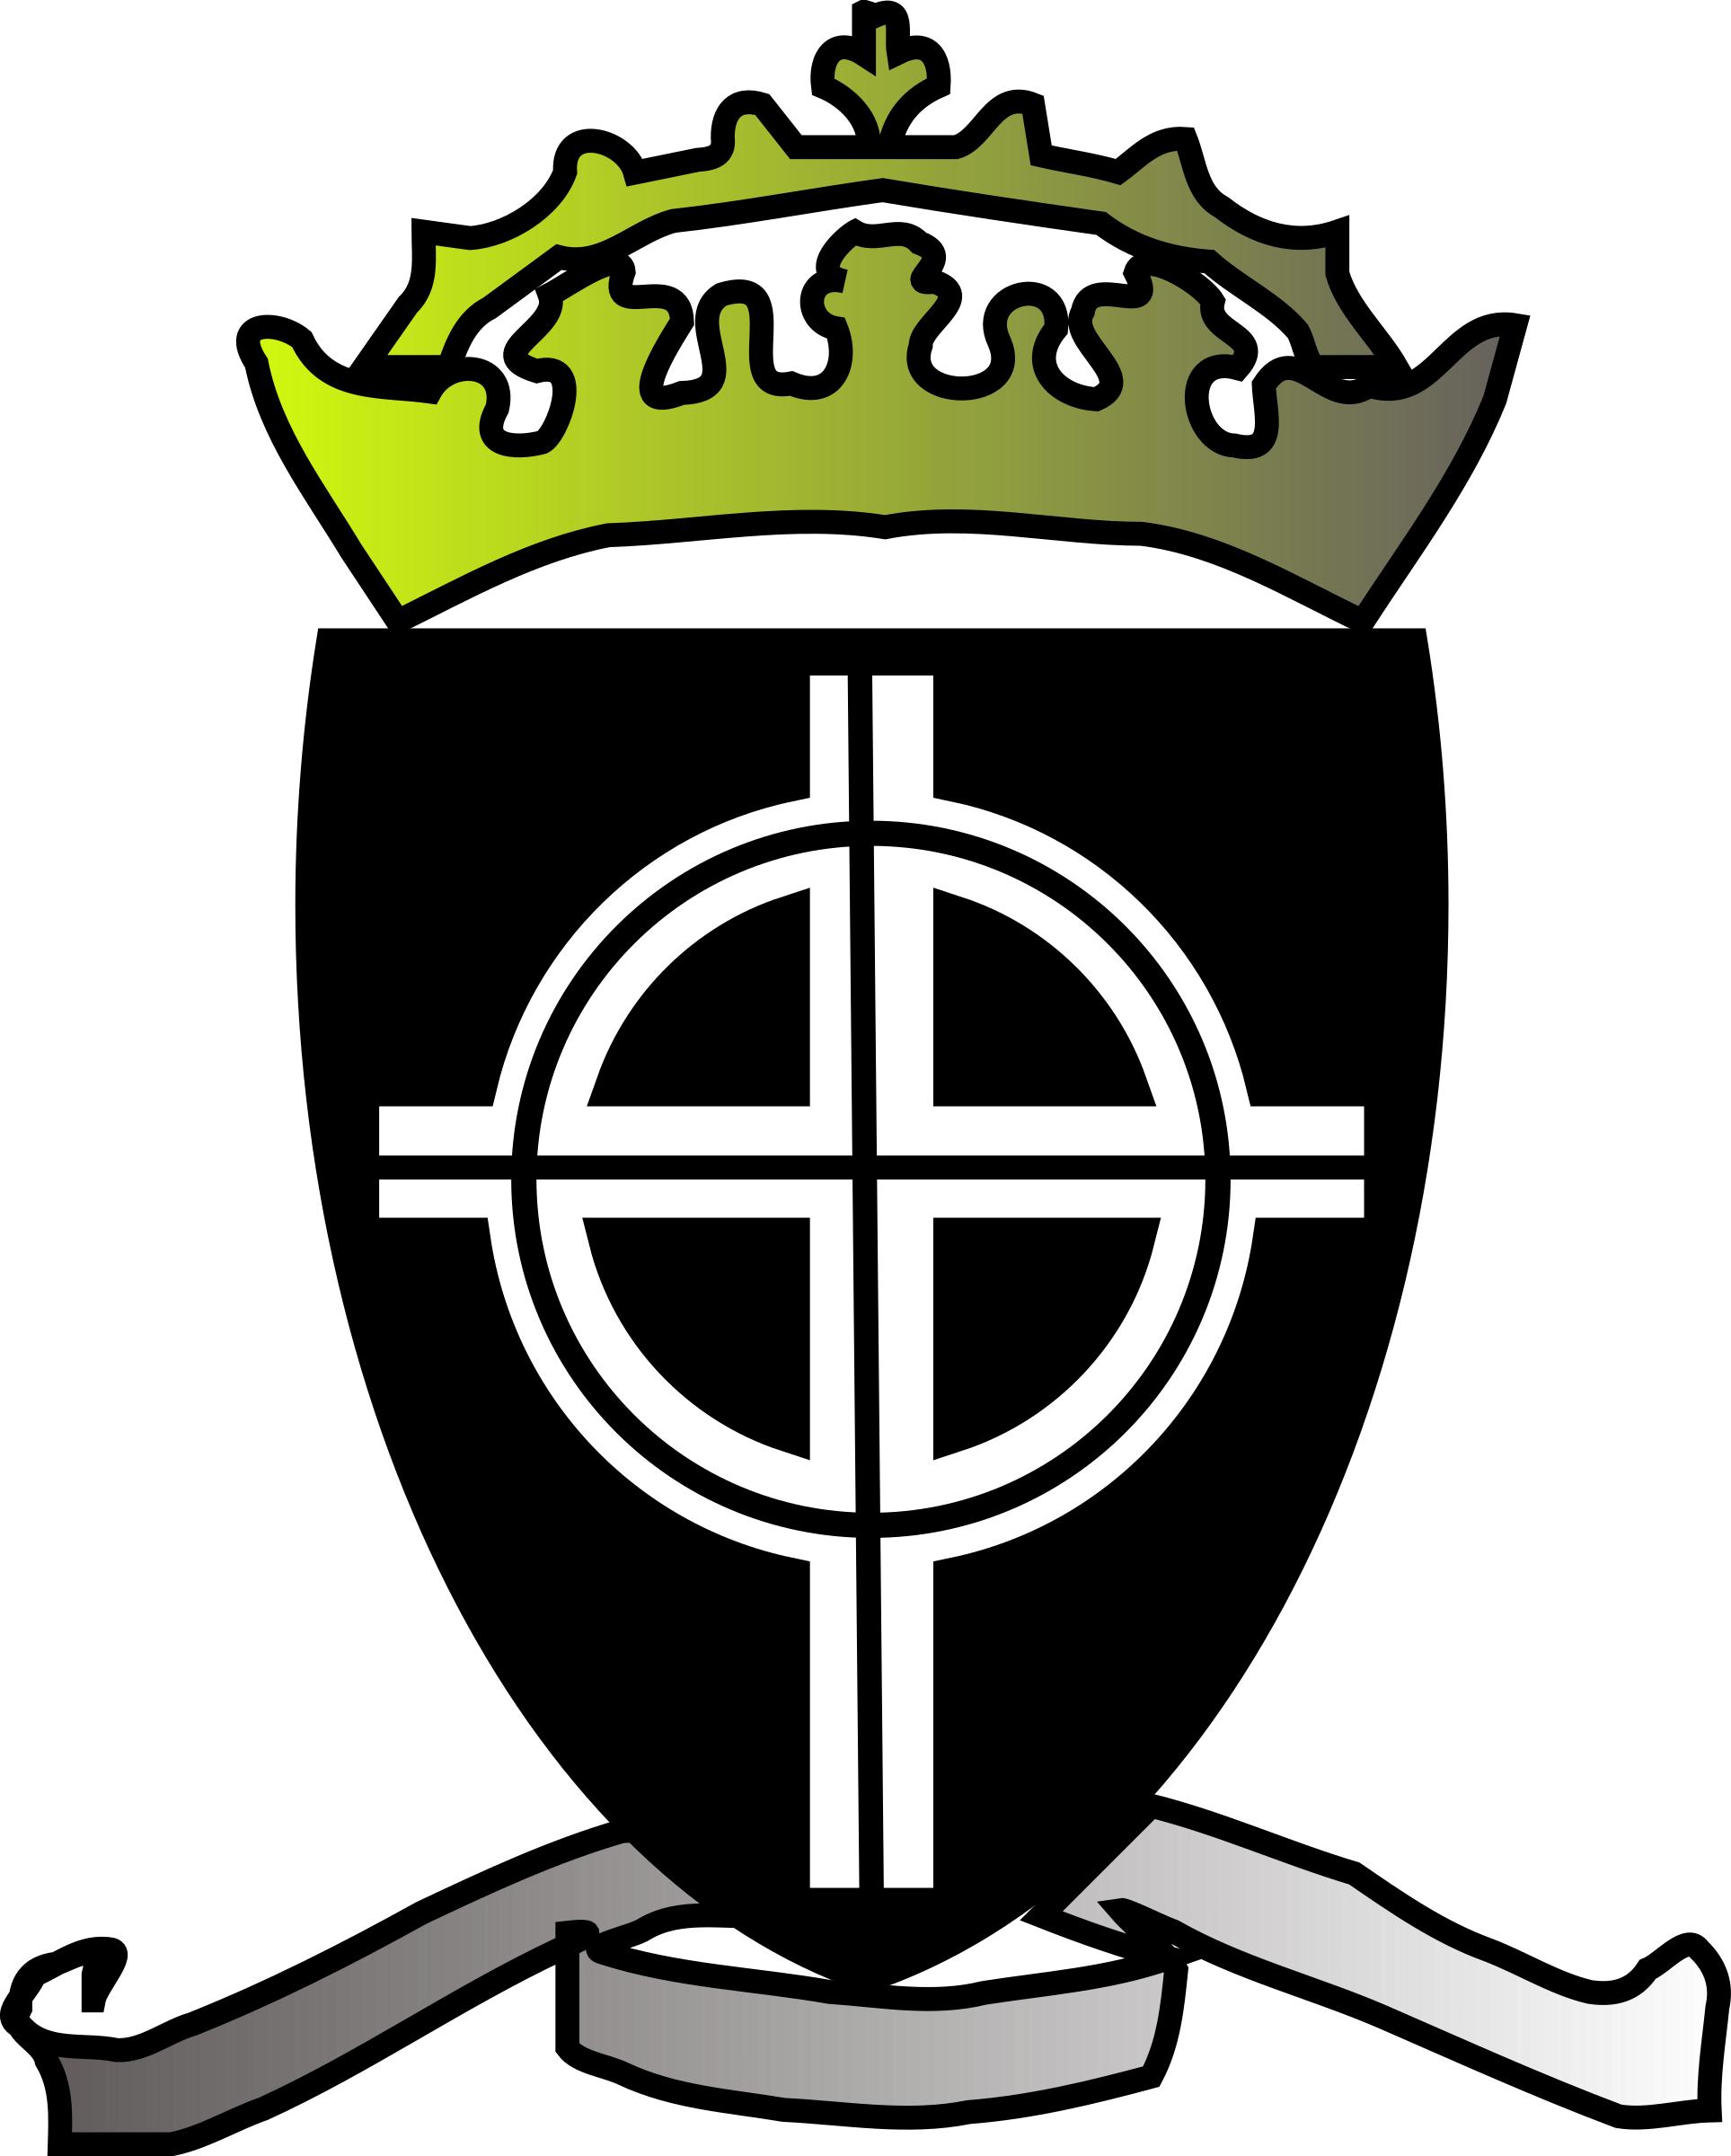 Emblem of Aristasia PNG icons